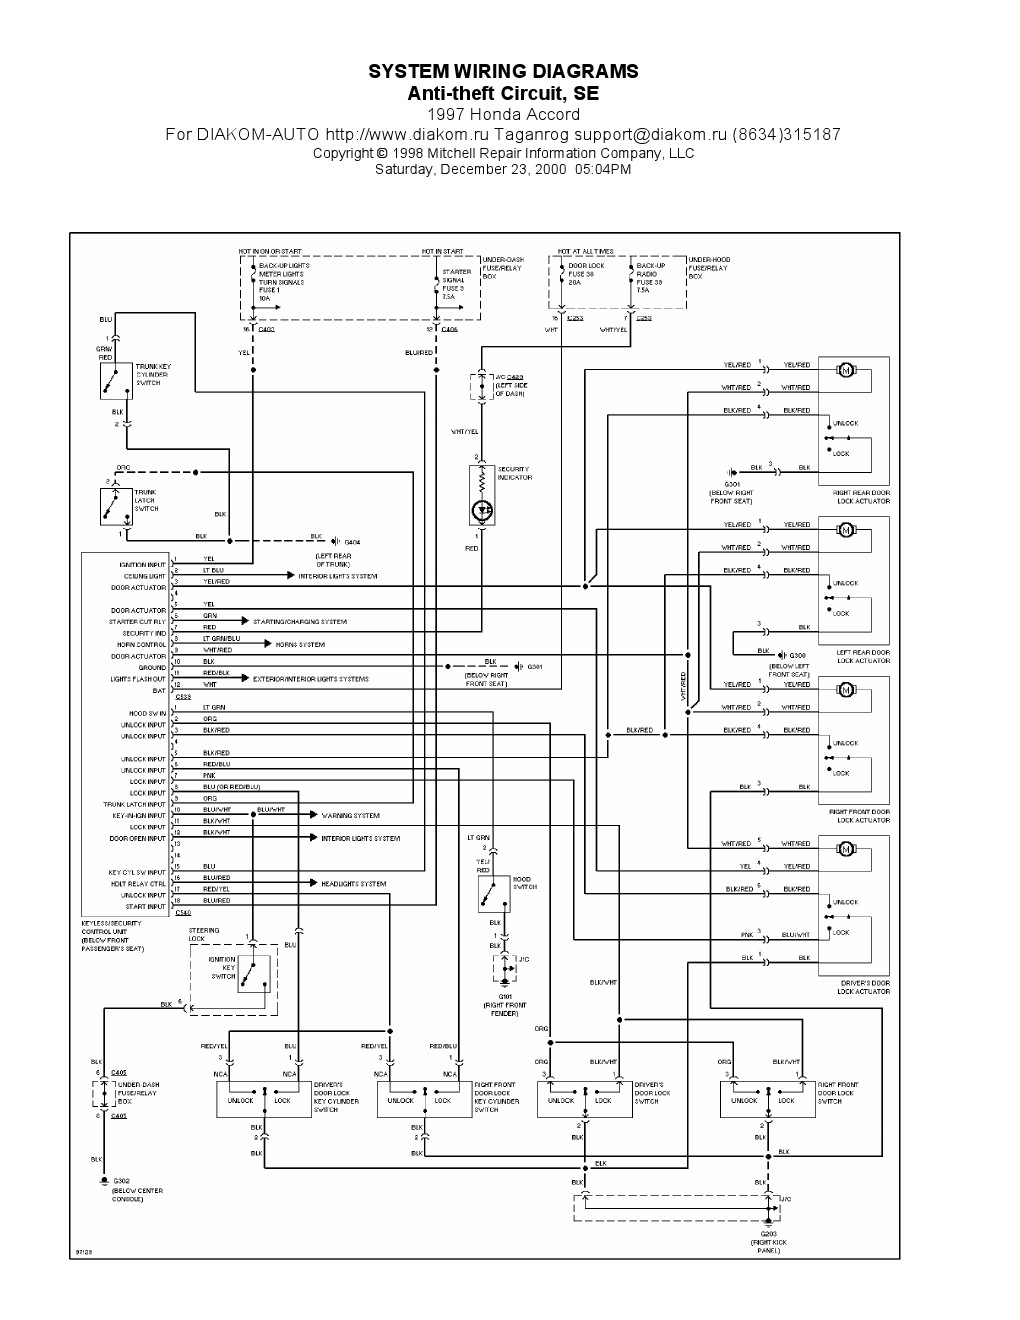 1997 Honda Accord Anti theft Circuit SE System Wiring Diagrams